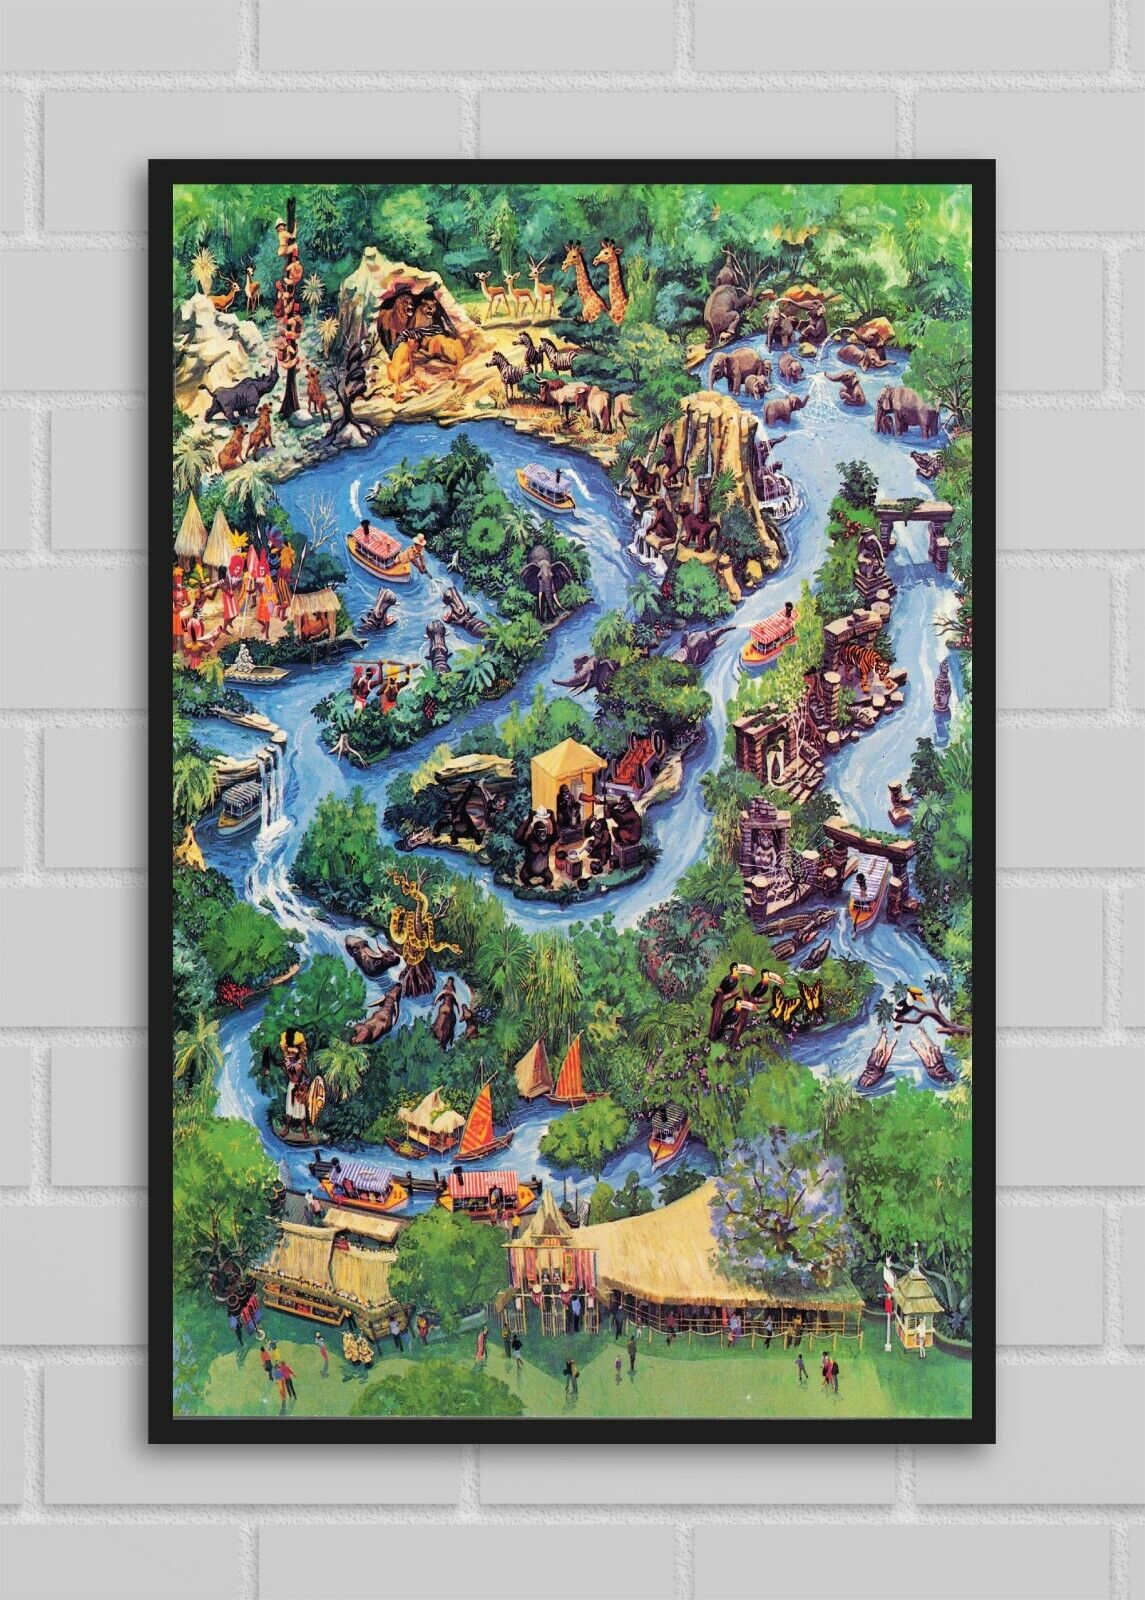 Disneyland Jungle Cruise Boat River Ride Trader Sam Elephants Attraction Poster 